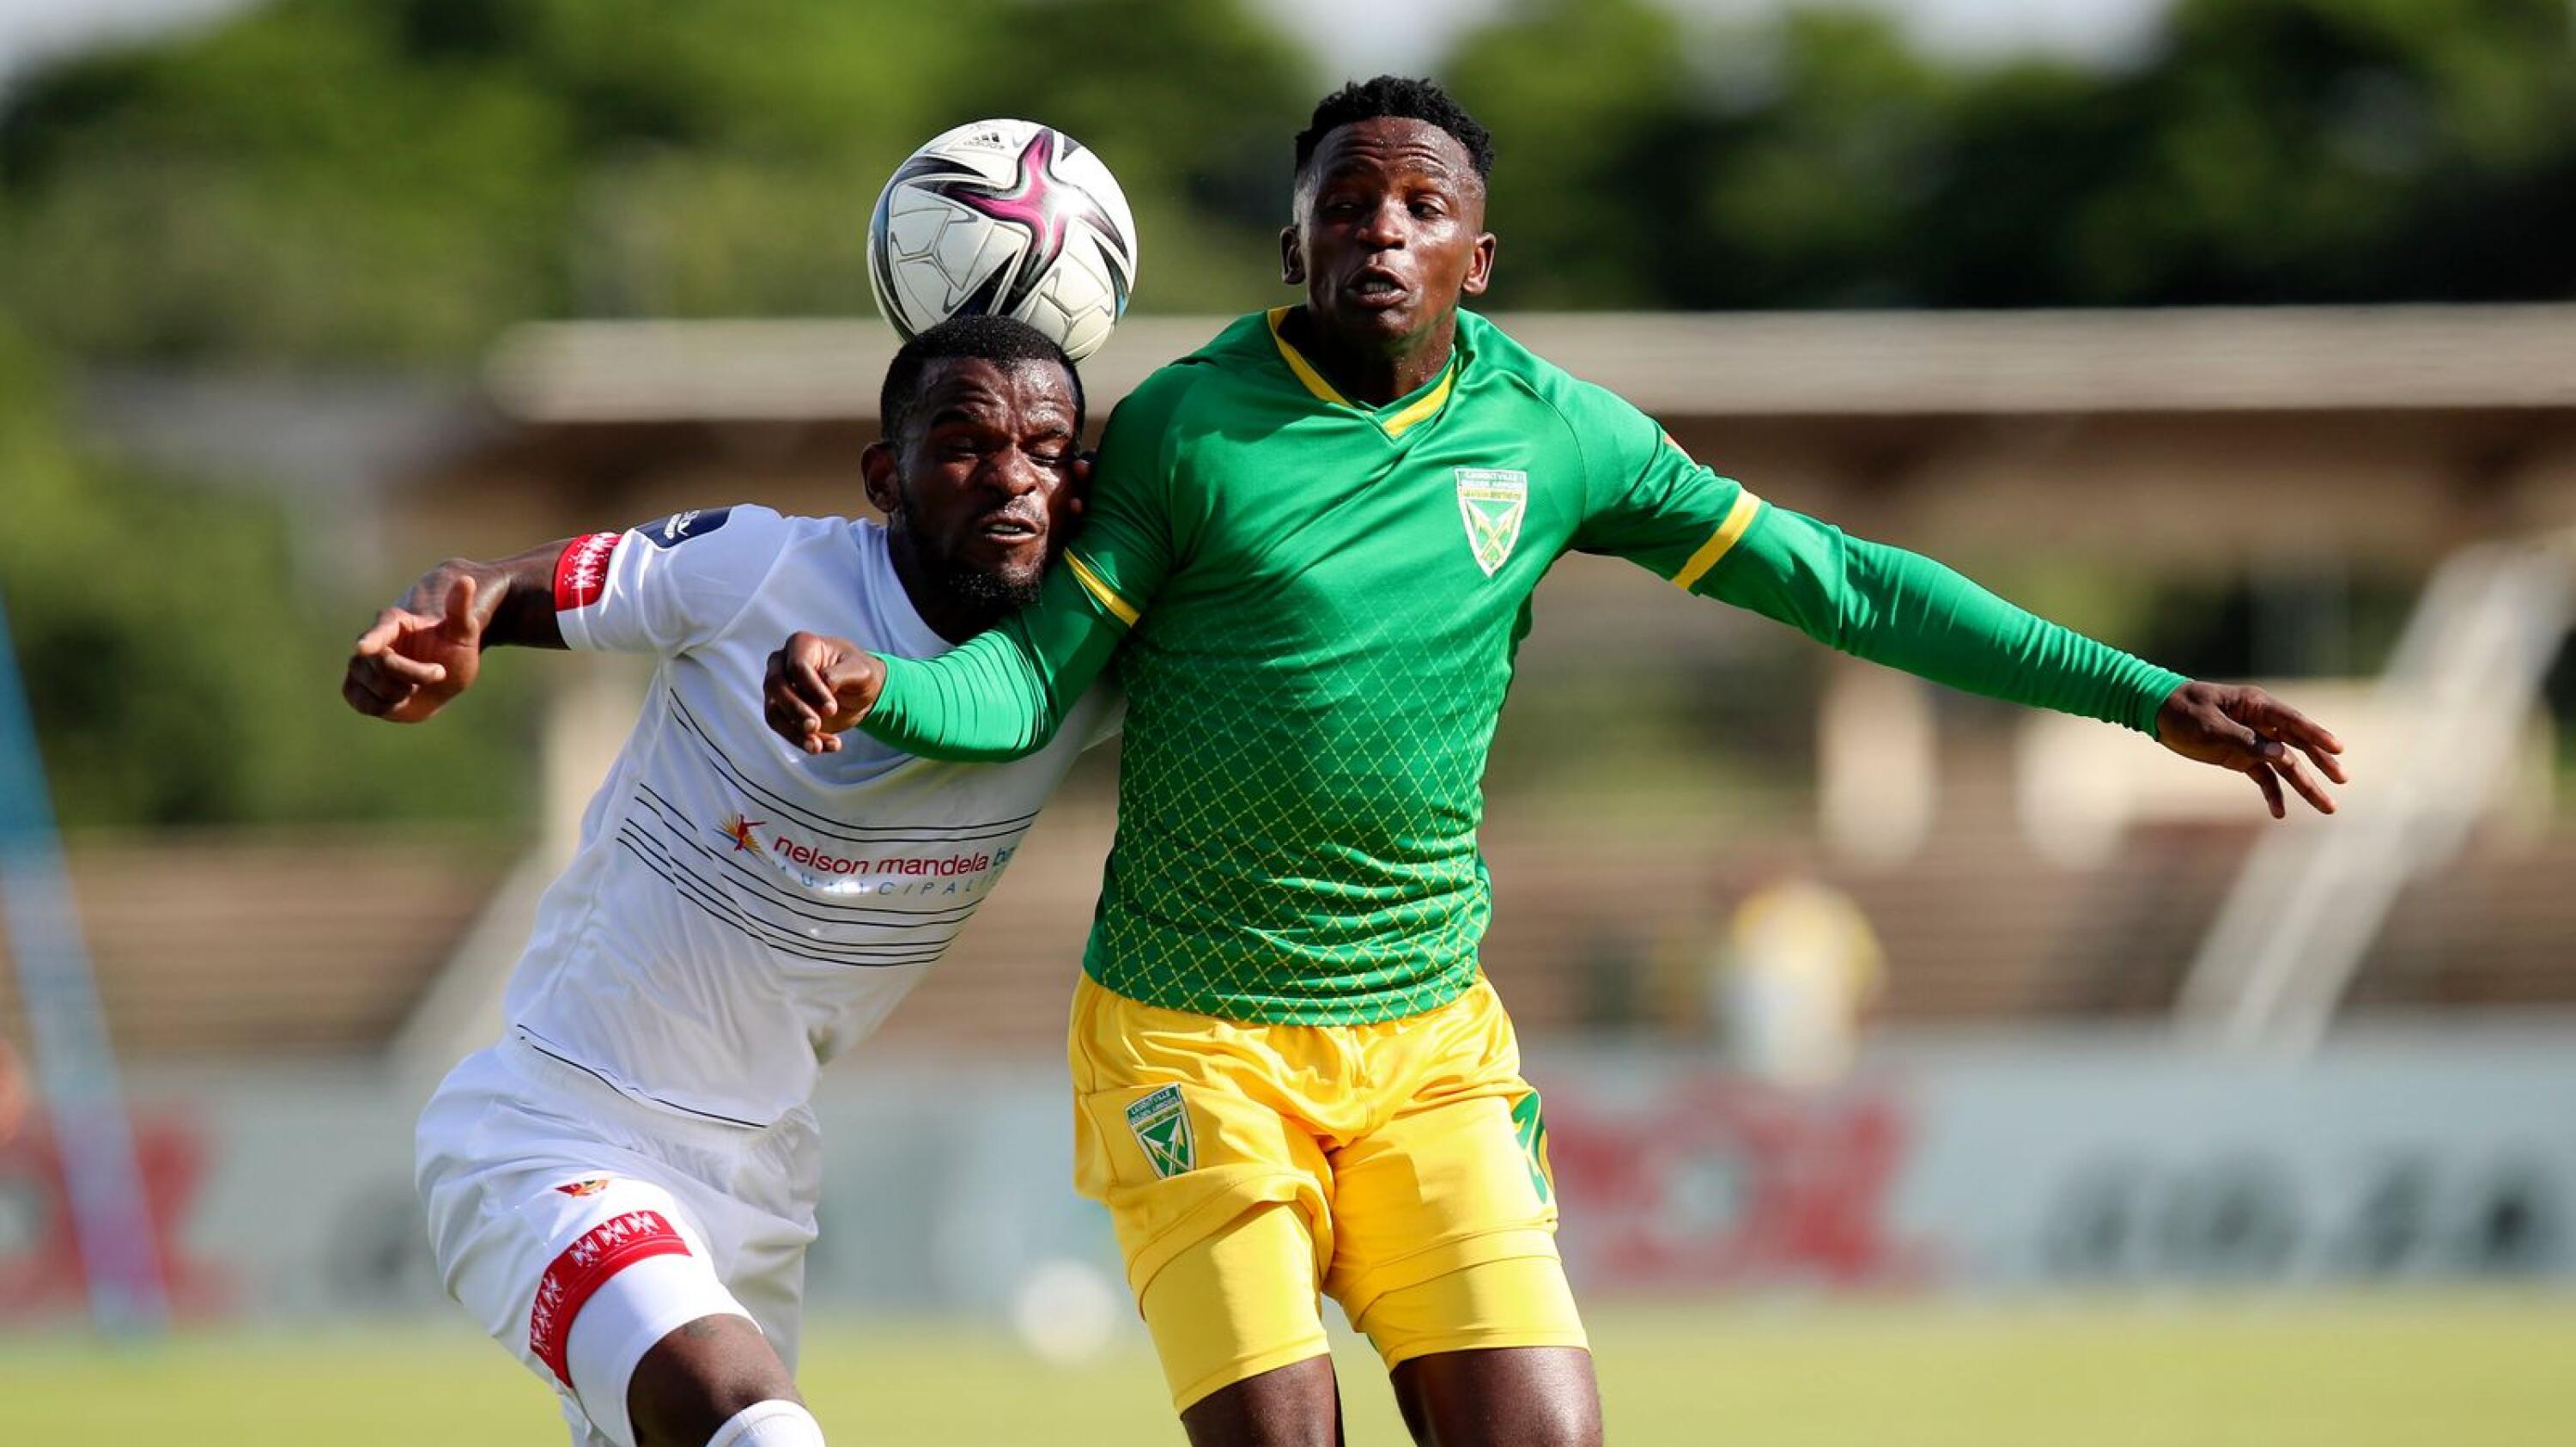 Tebogo Makobela of Chippa United is challenged by Sbonelo Cele of Golden Arrows during their DStv Premiership match at Princess Magogo Stadium in KwaMashu, Durban on Sunday